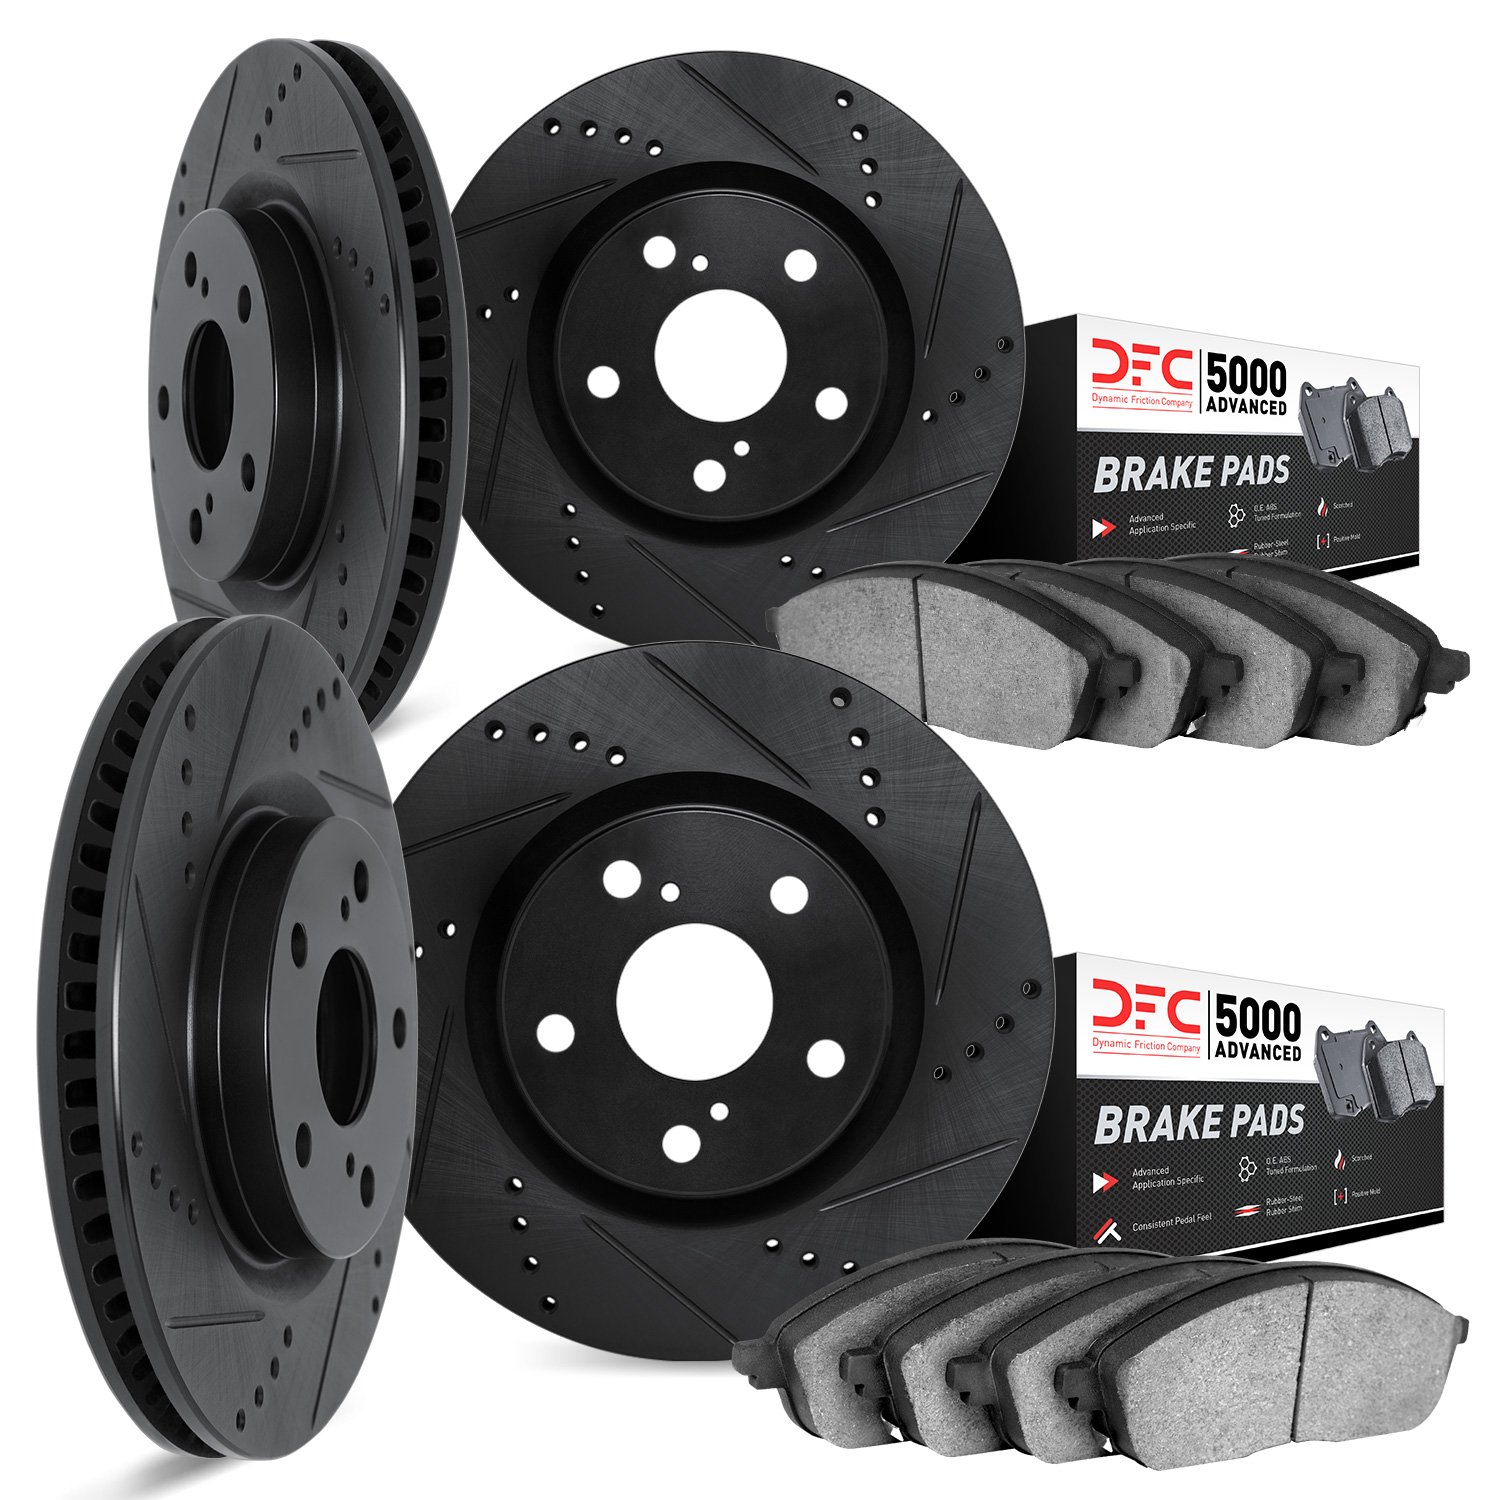 8504-54304 Drilled/Slotted Brake Rotors w/5000 Advanced Brake Pads Kit [Black], 2007-2008 Ford/Lincoln/Mercury/Mazda, Position: